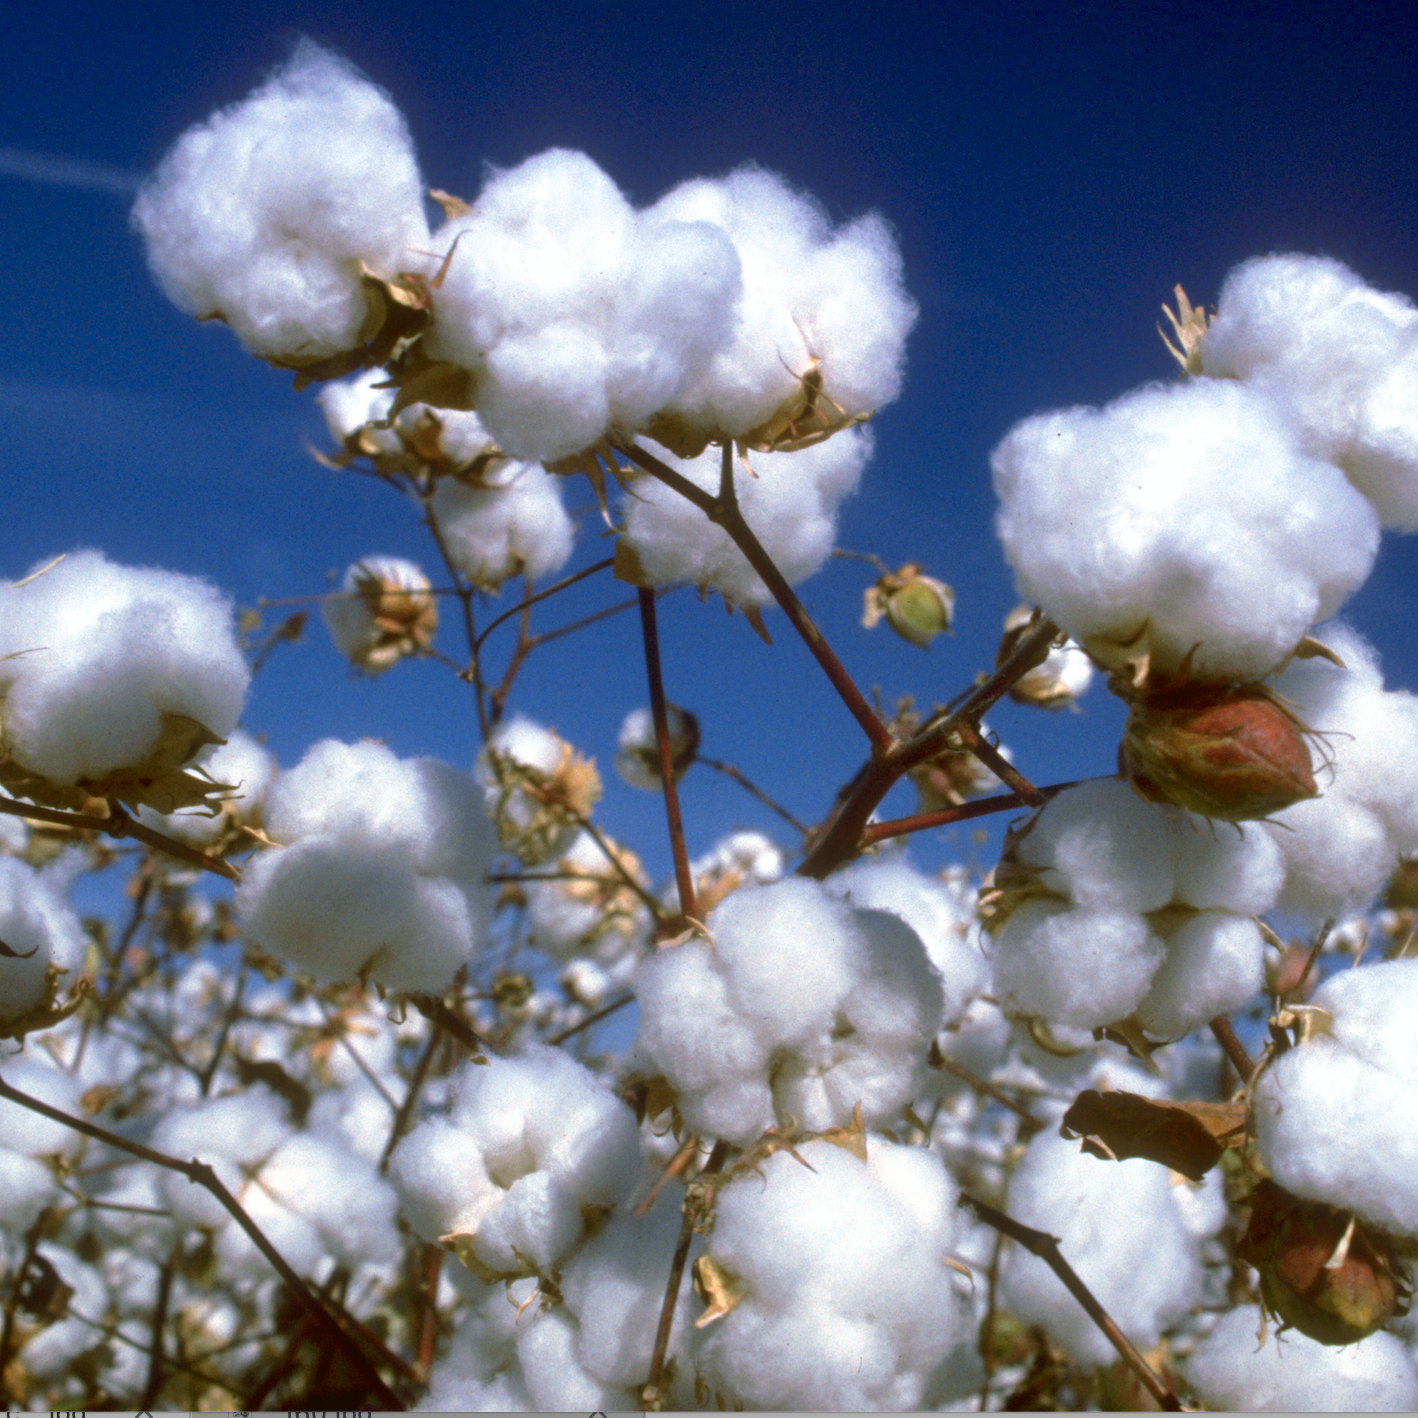 Breathable cotton